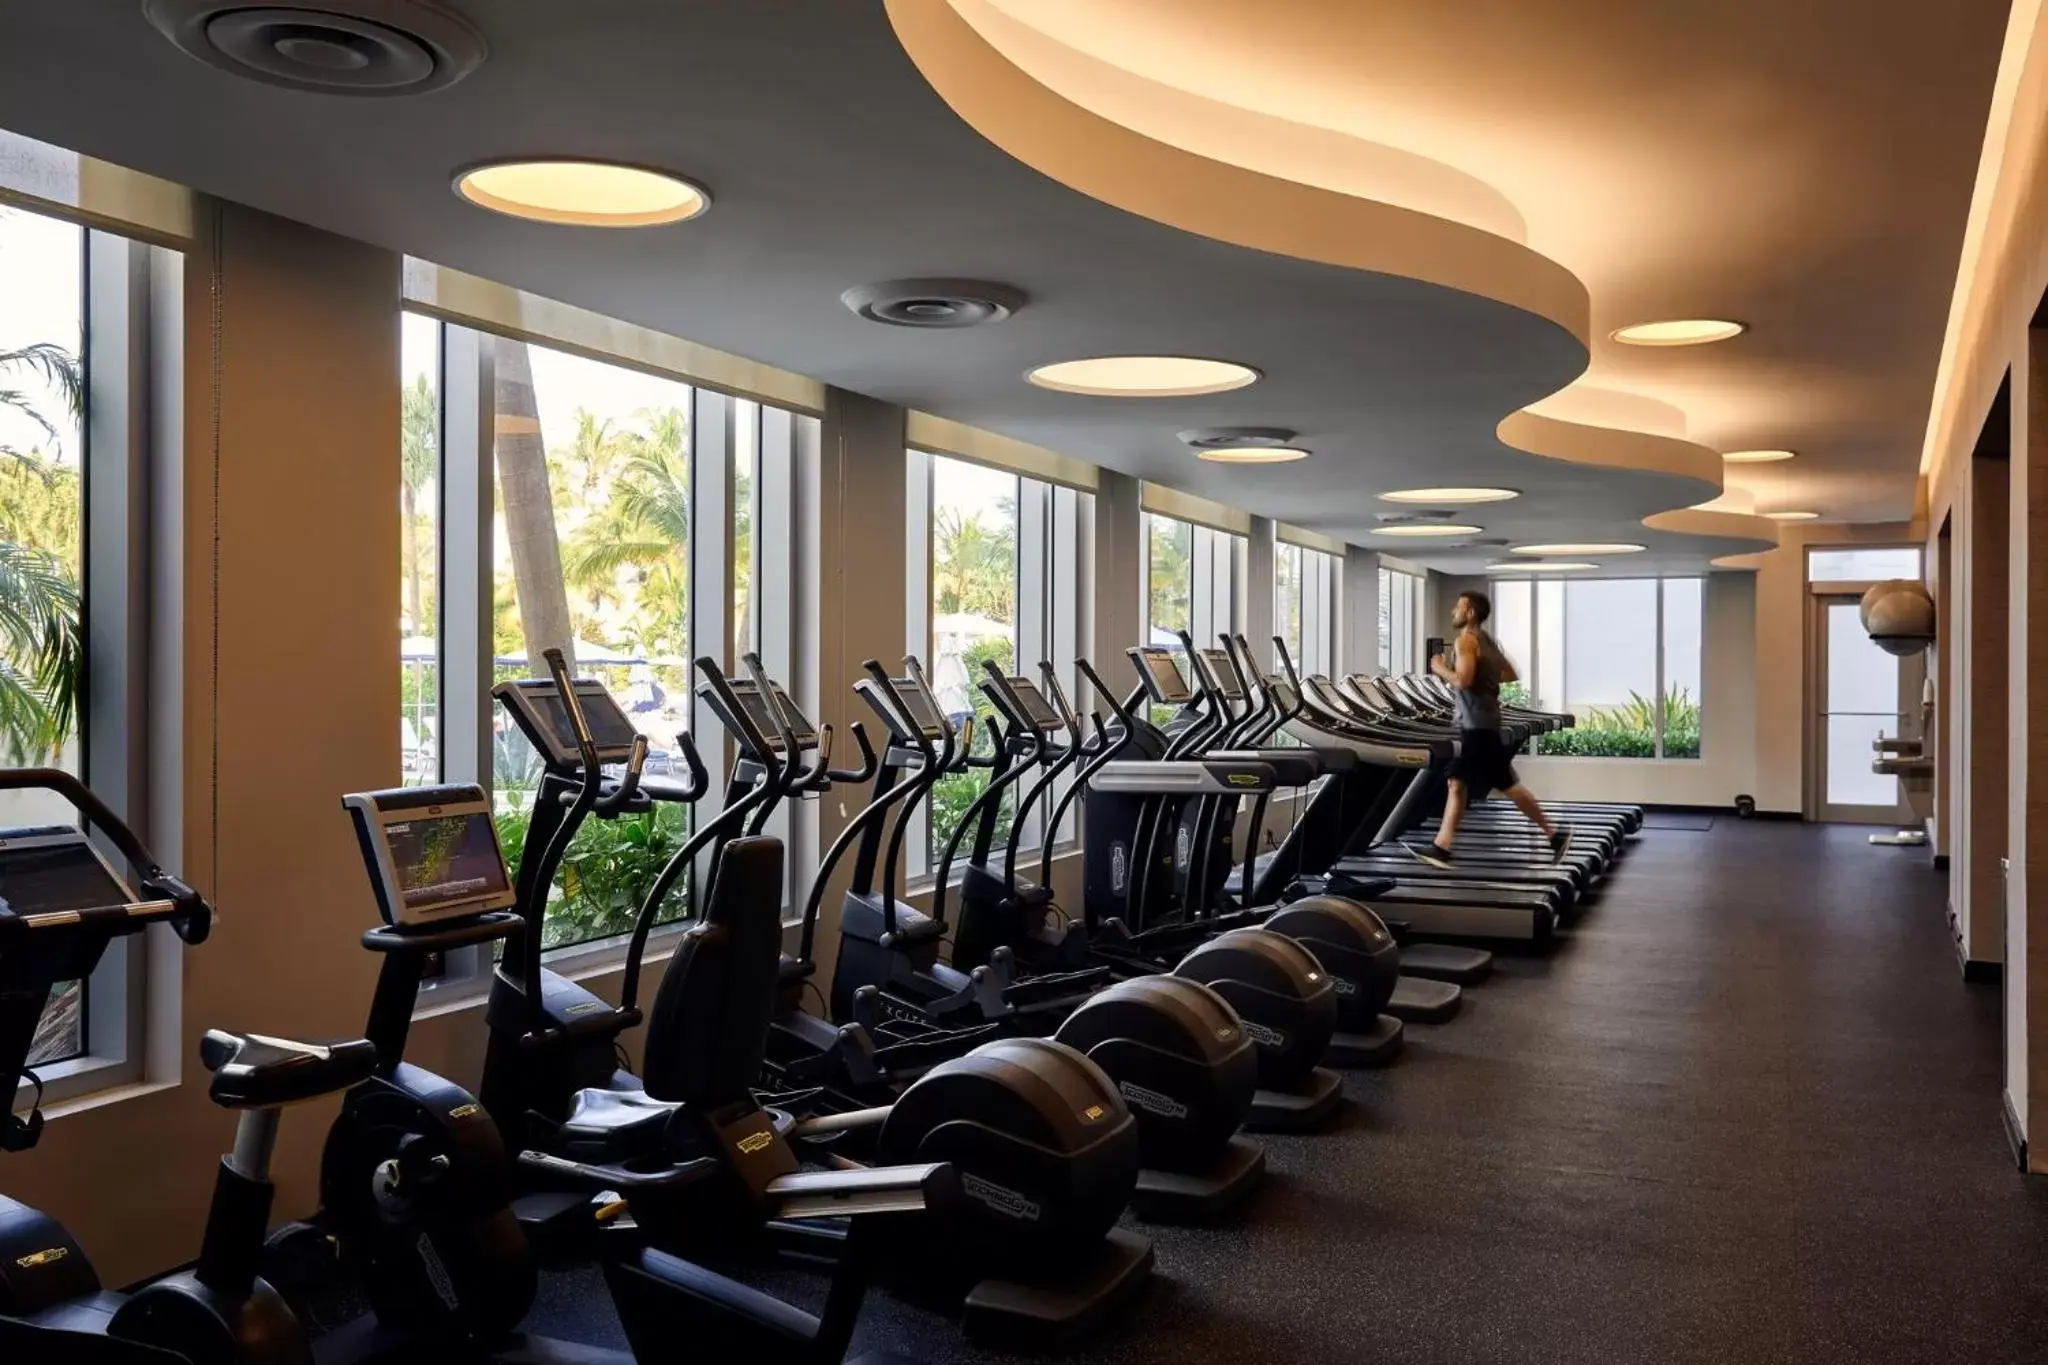 Fitness centre/facilities, Fitness Center/Facilities in Loews Miami Beach Hotel